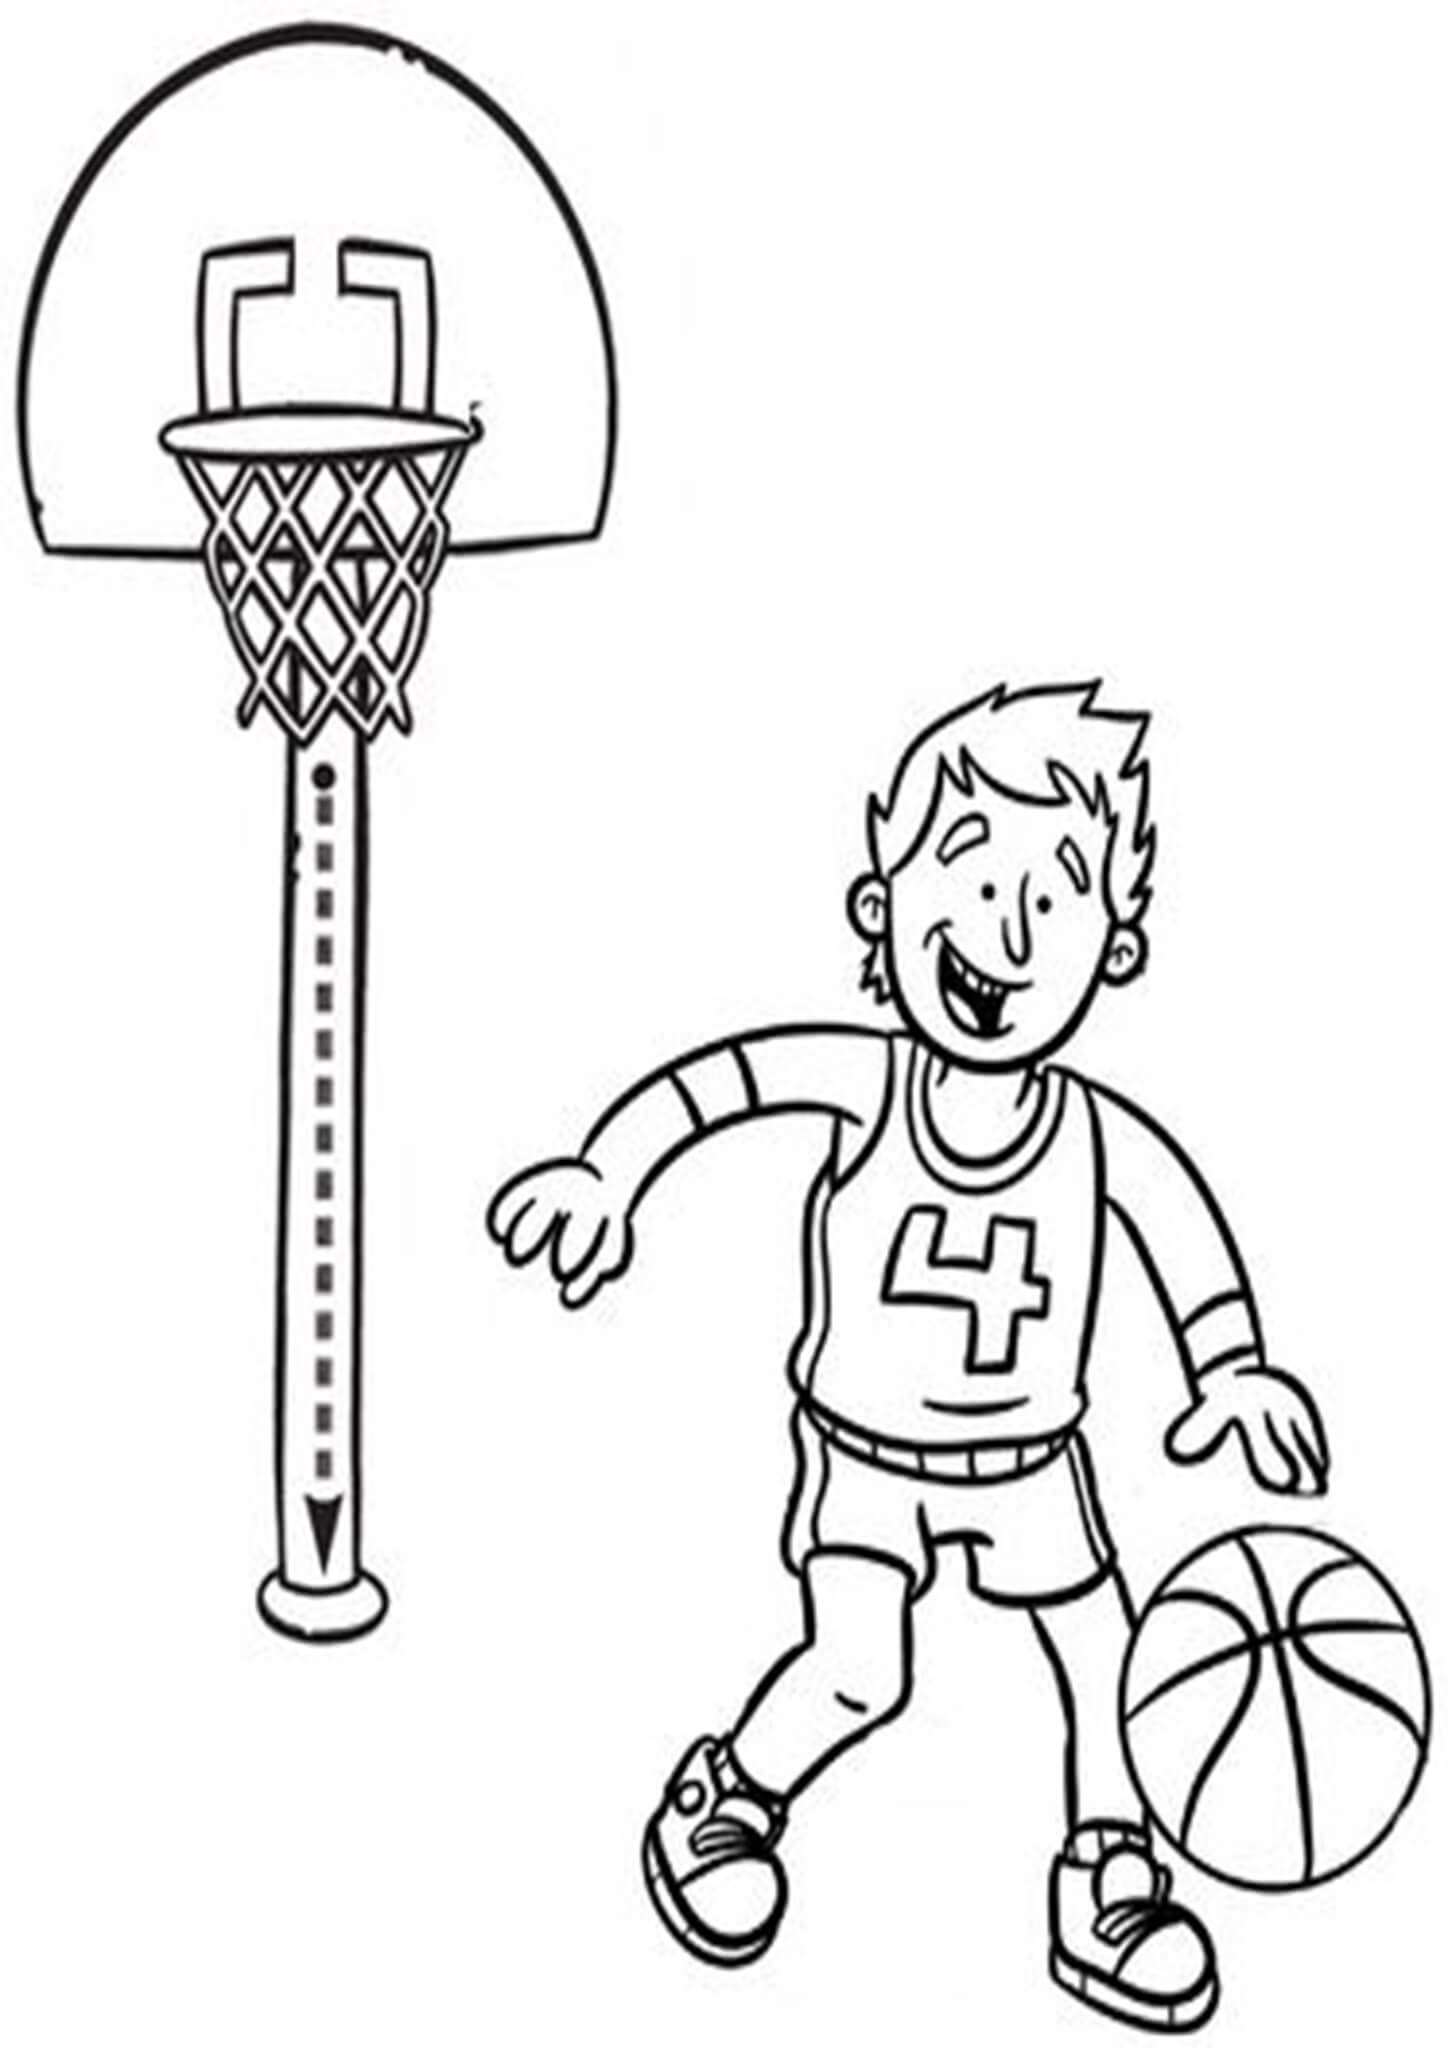 BasketballToon.jpg